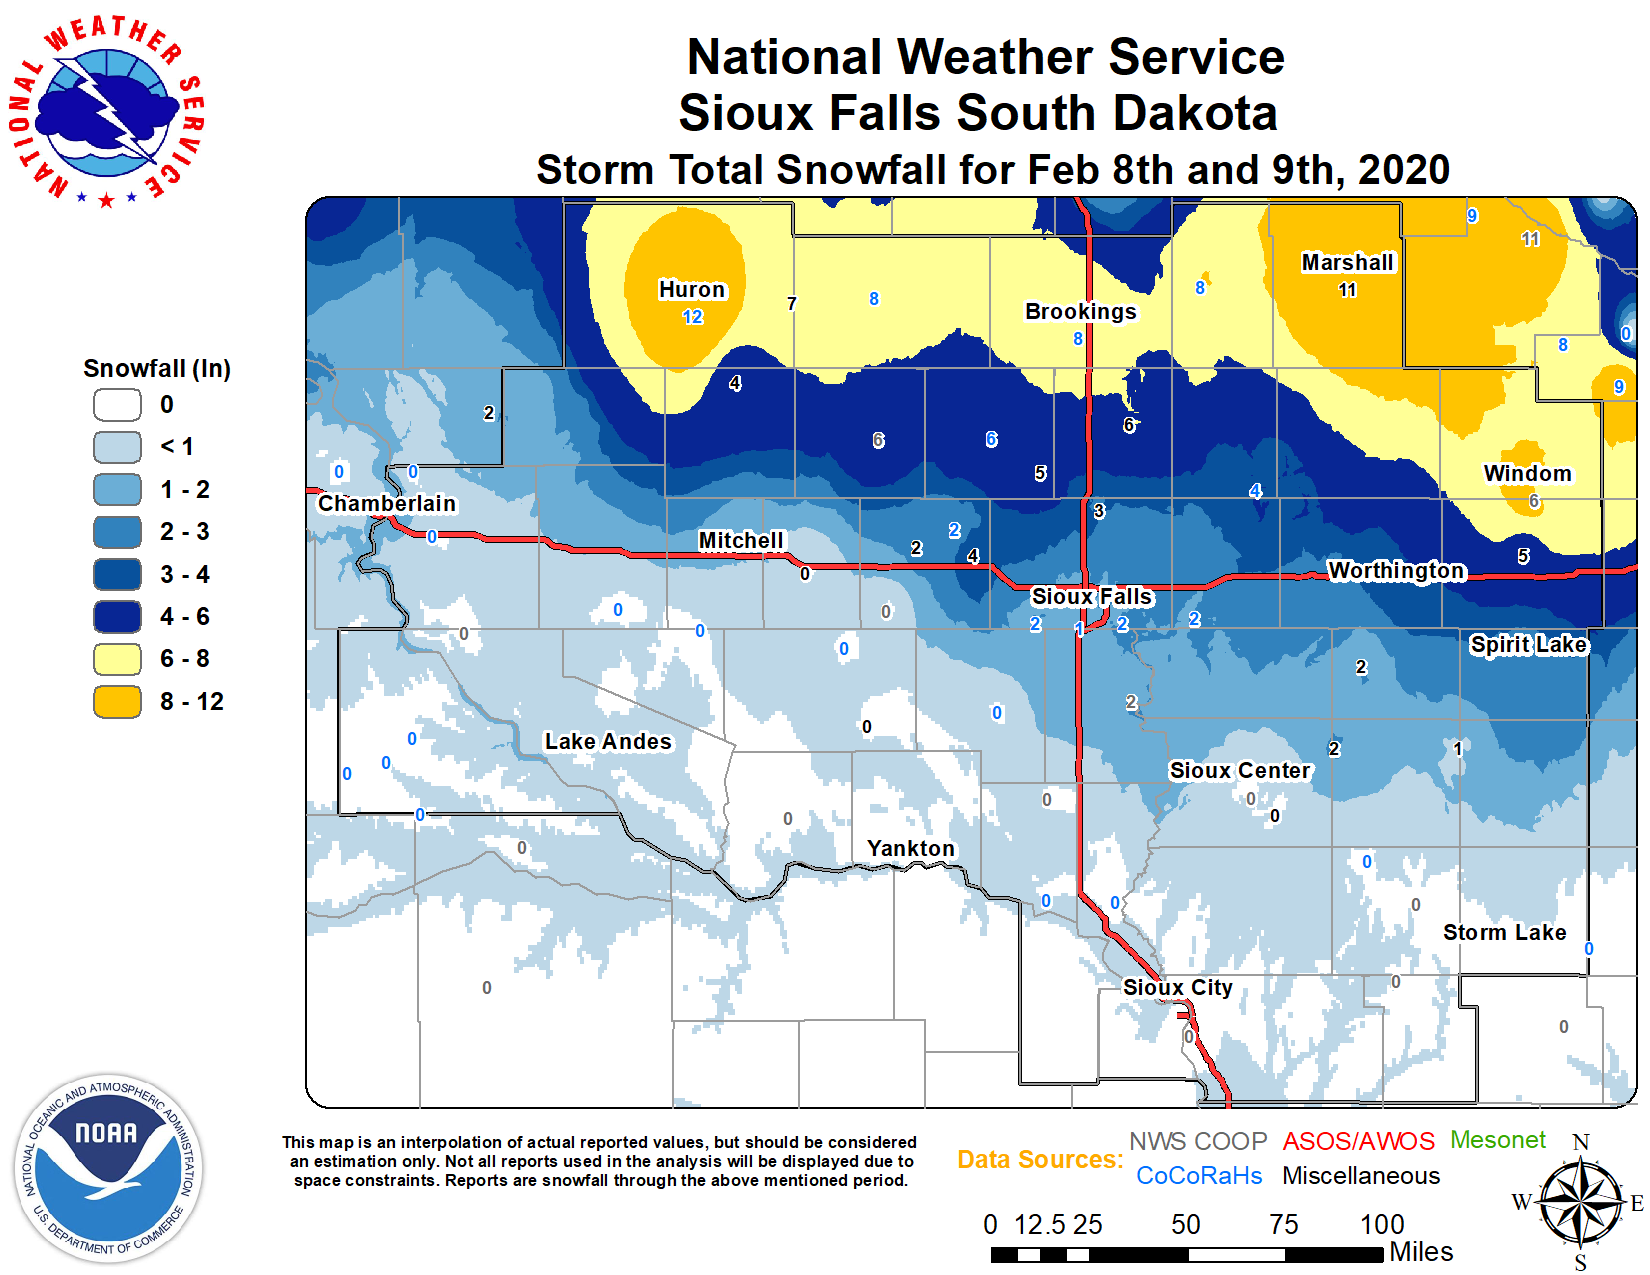 Band of Heavy Snow Across East Central South Dakota Into Southwest Minnesota